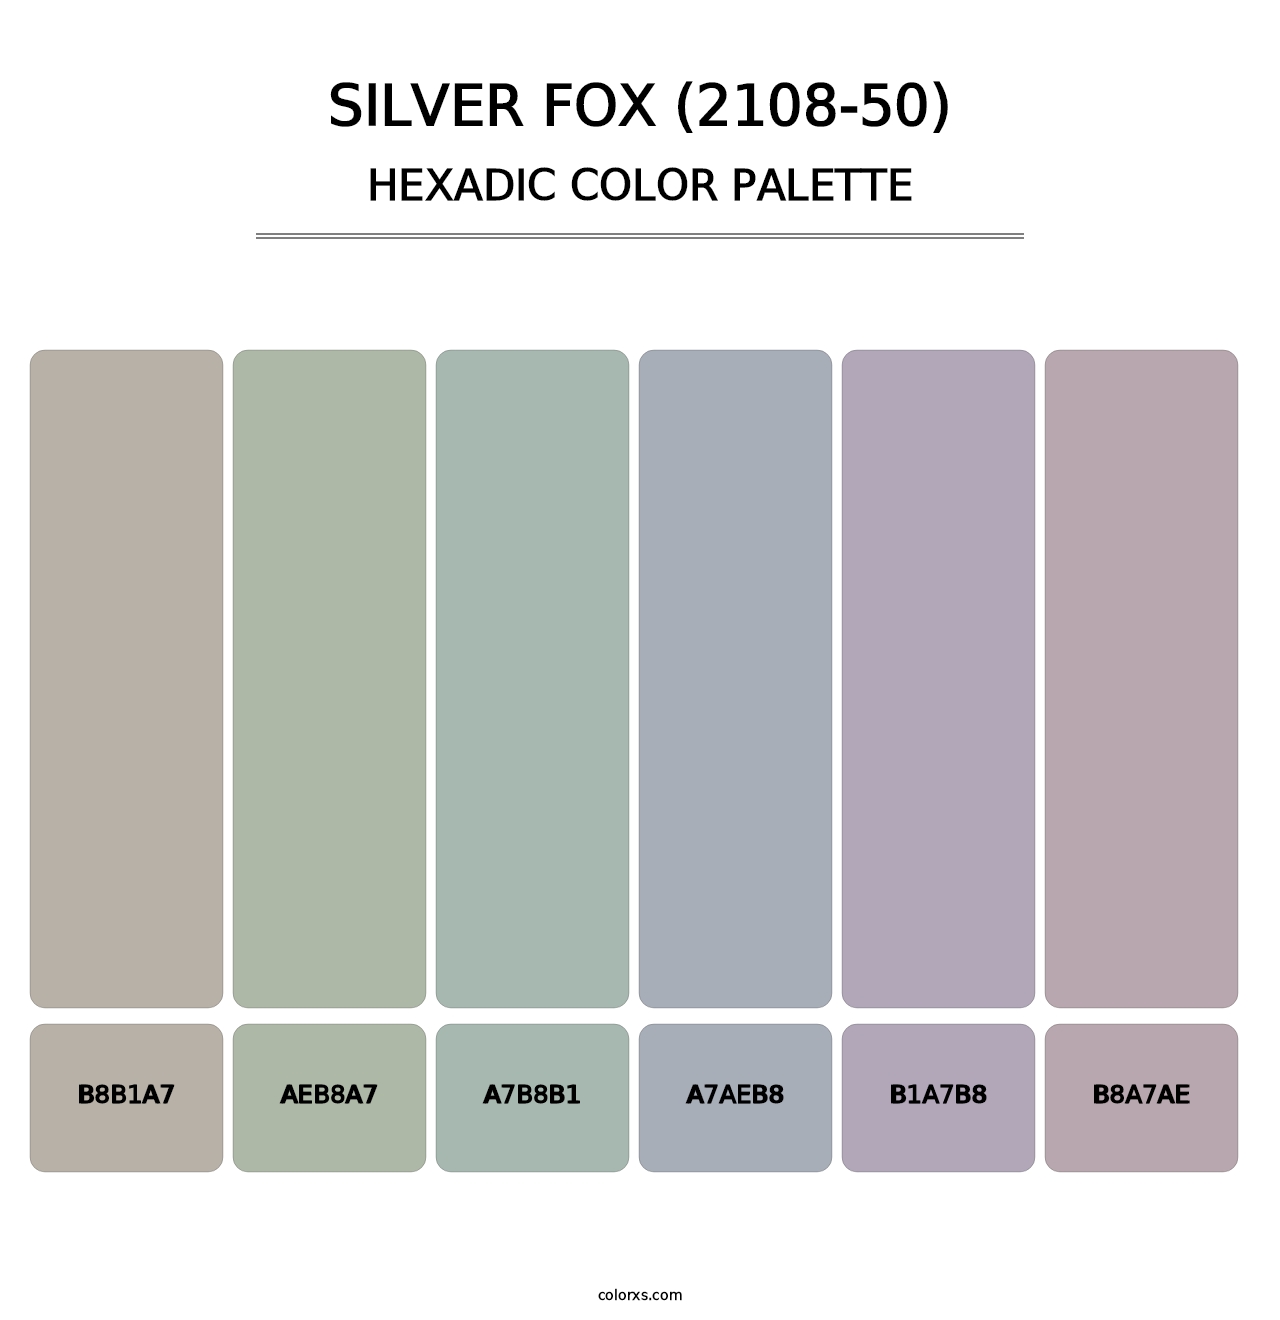 Silver Fox (2108-50) - Hexadic Color Palette